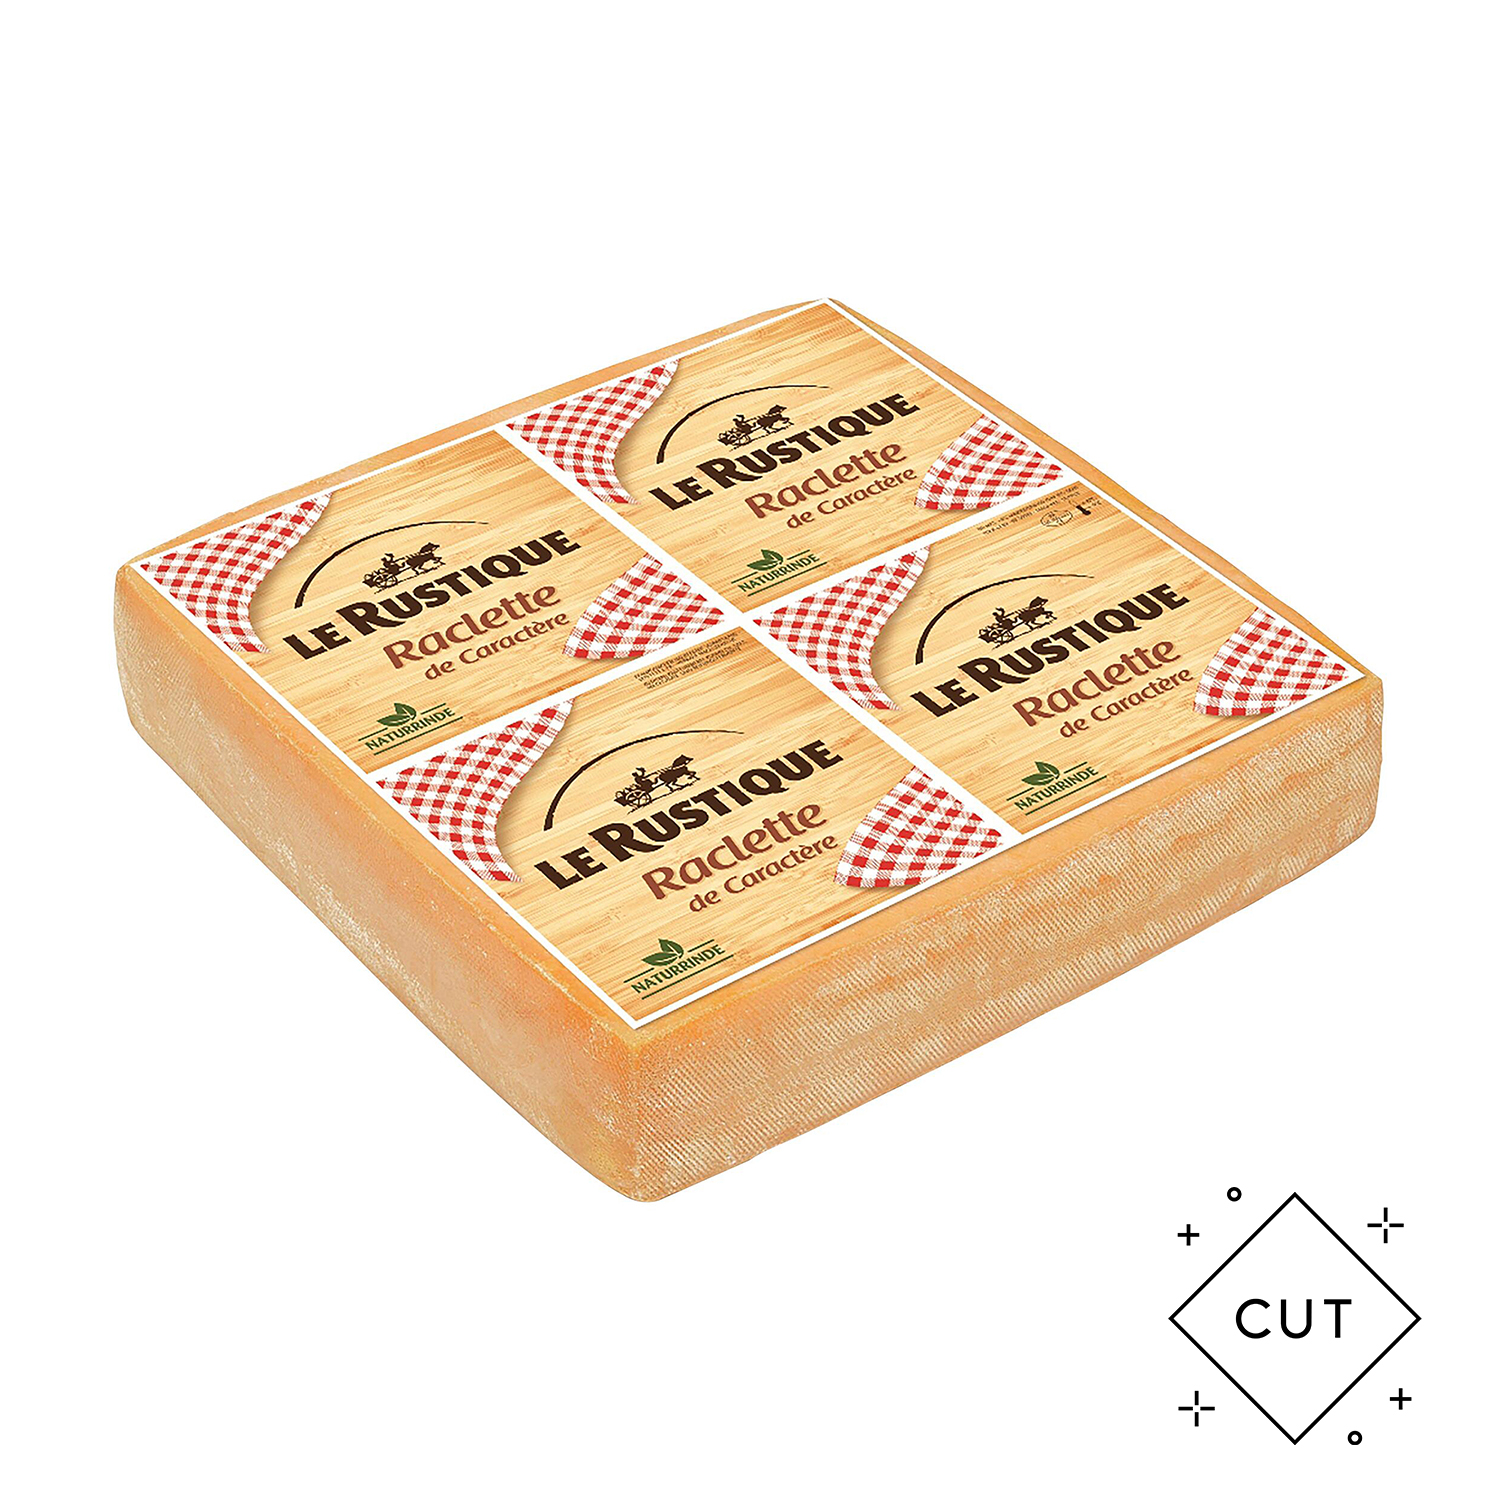 Le Rustique Raclette Cheese (200g)